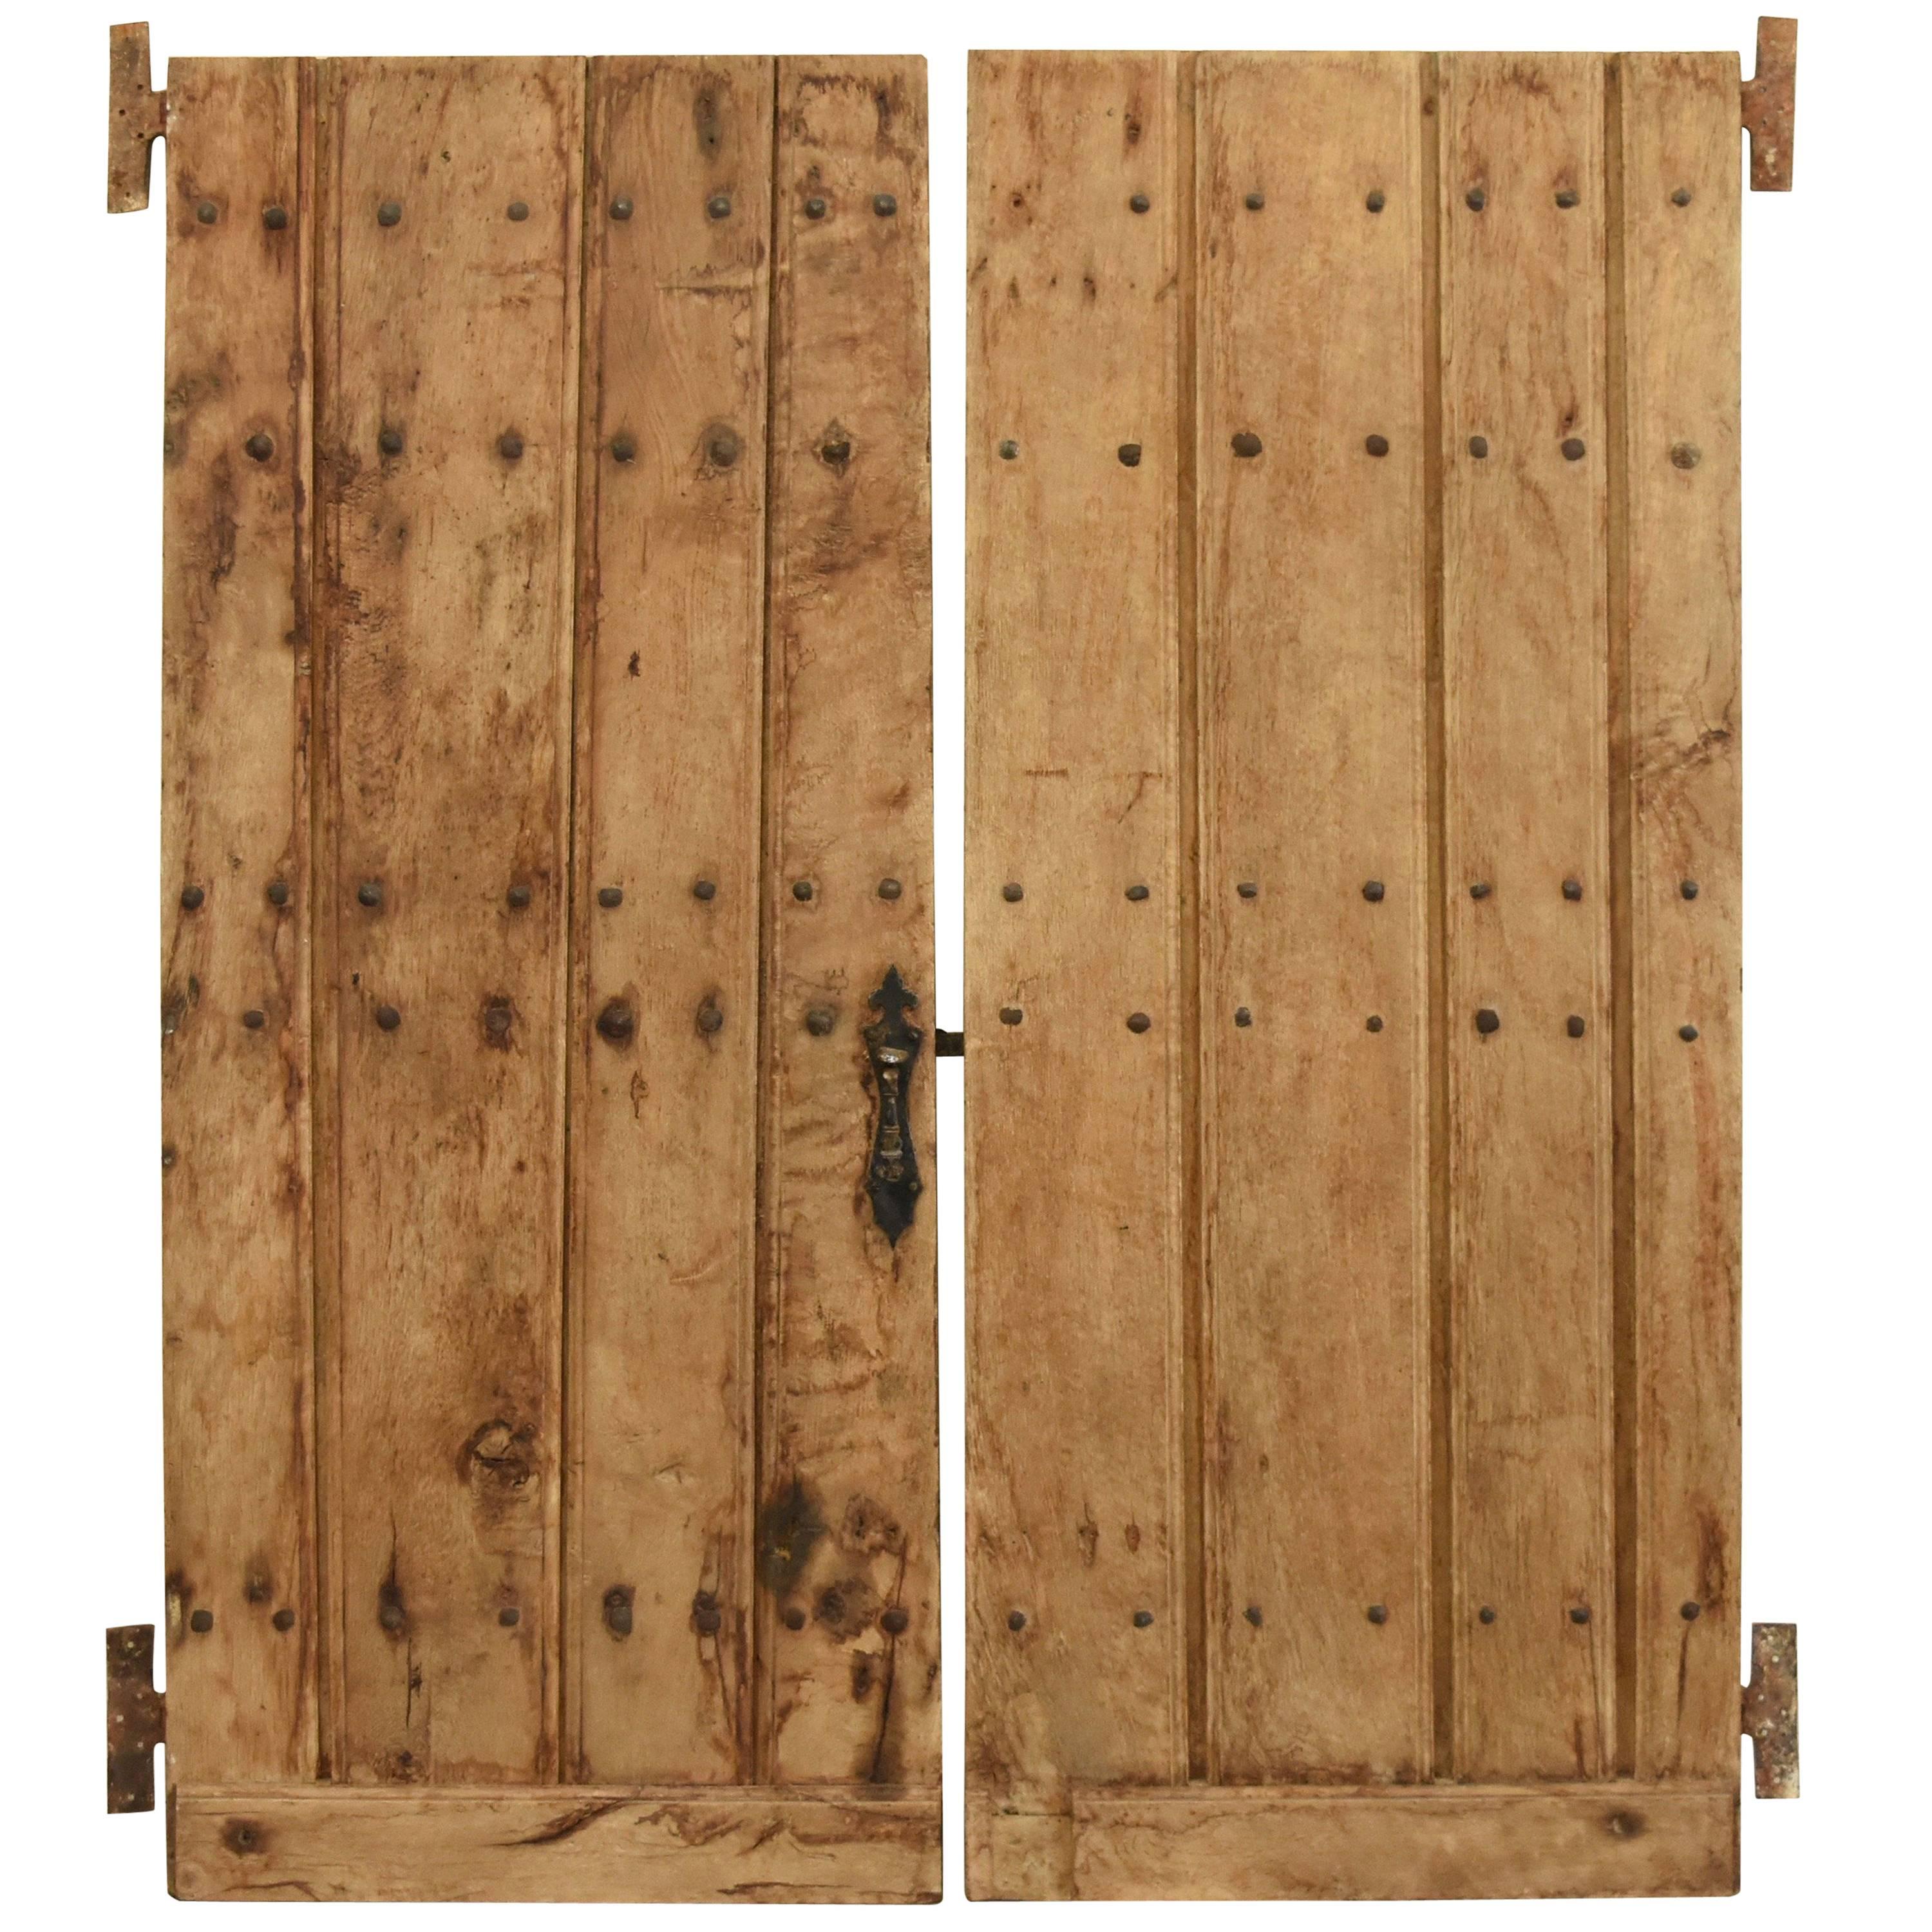 Pair of 17th Century Spanish Doors from the Basque Region with Original Iron